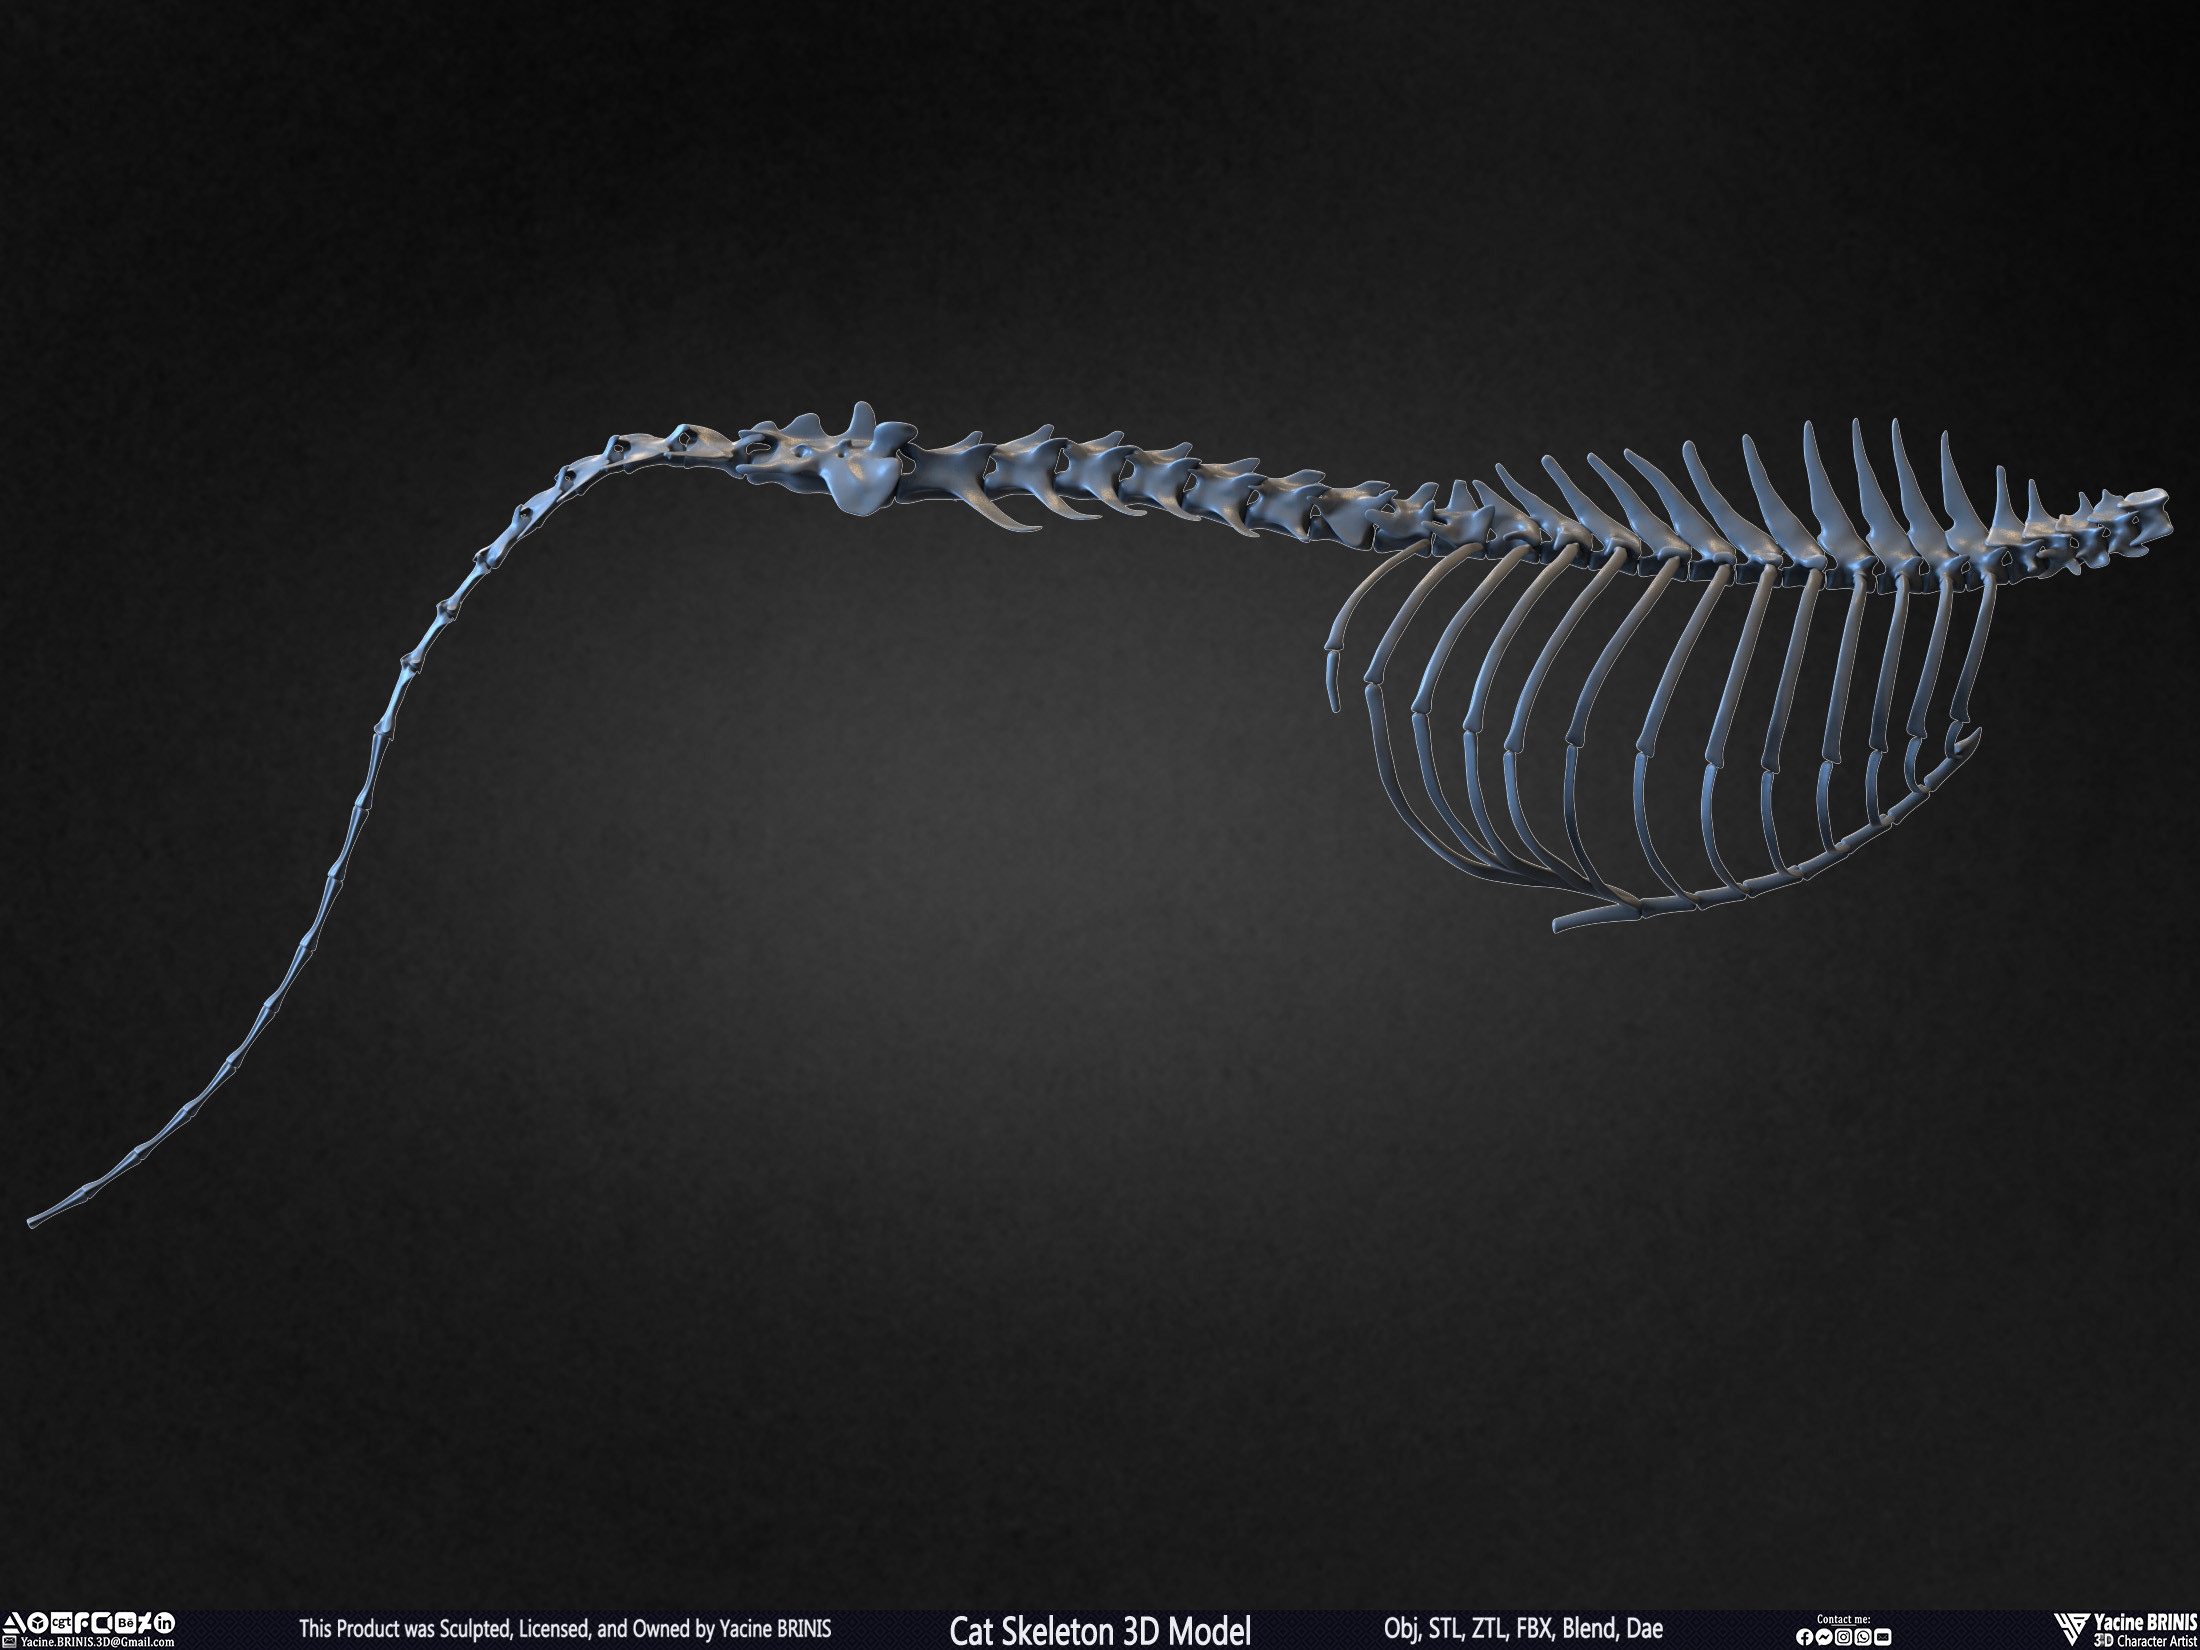 Highly Detailed Cat Skeleton 3D Model Sculpted by Yacine BRINIS Set 038